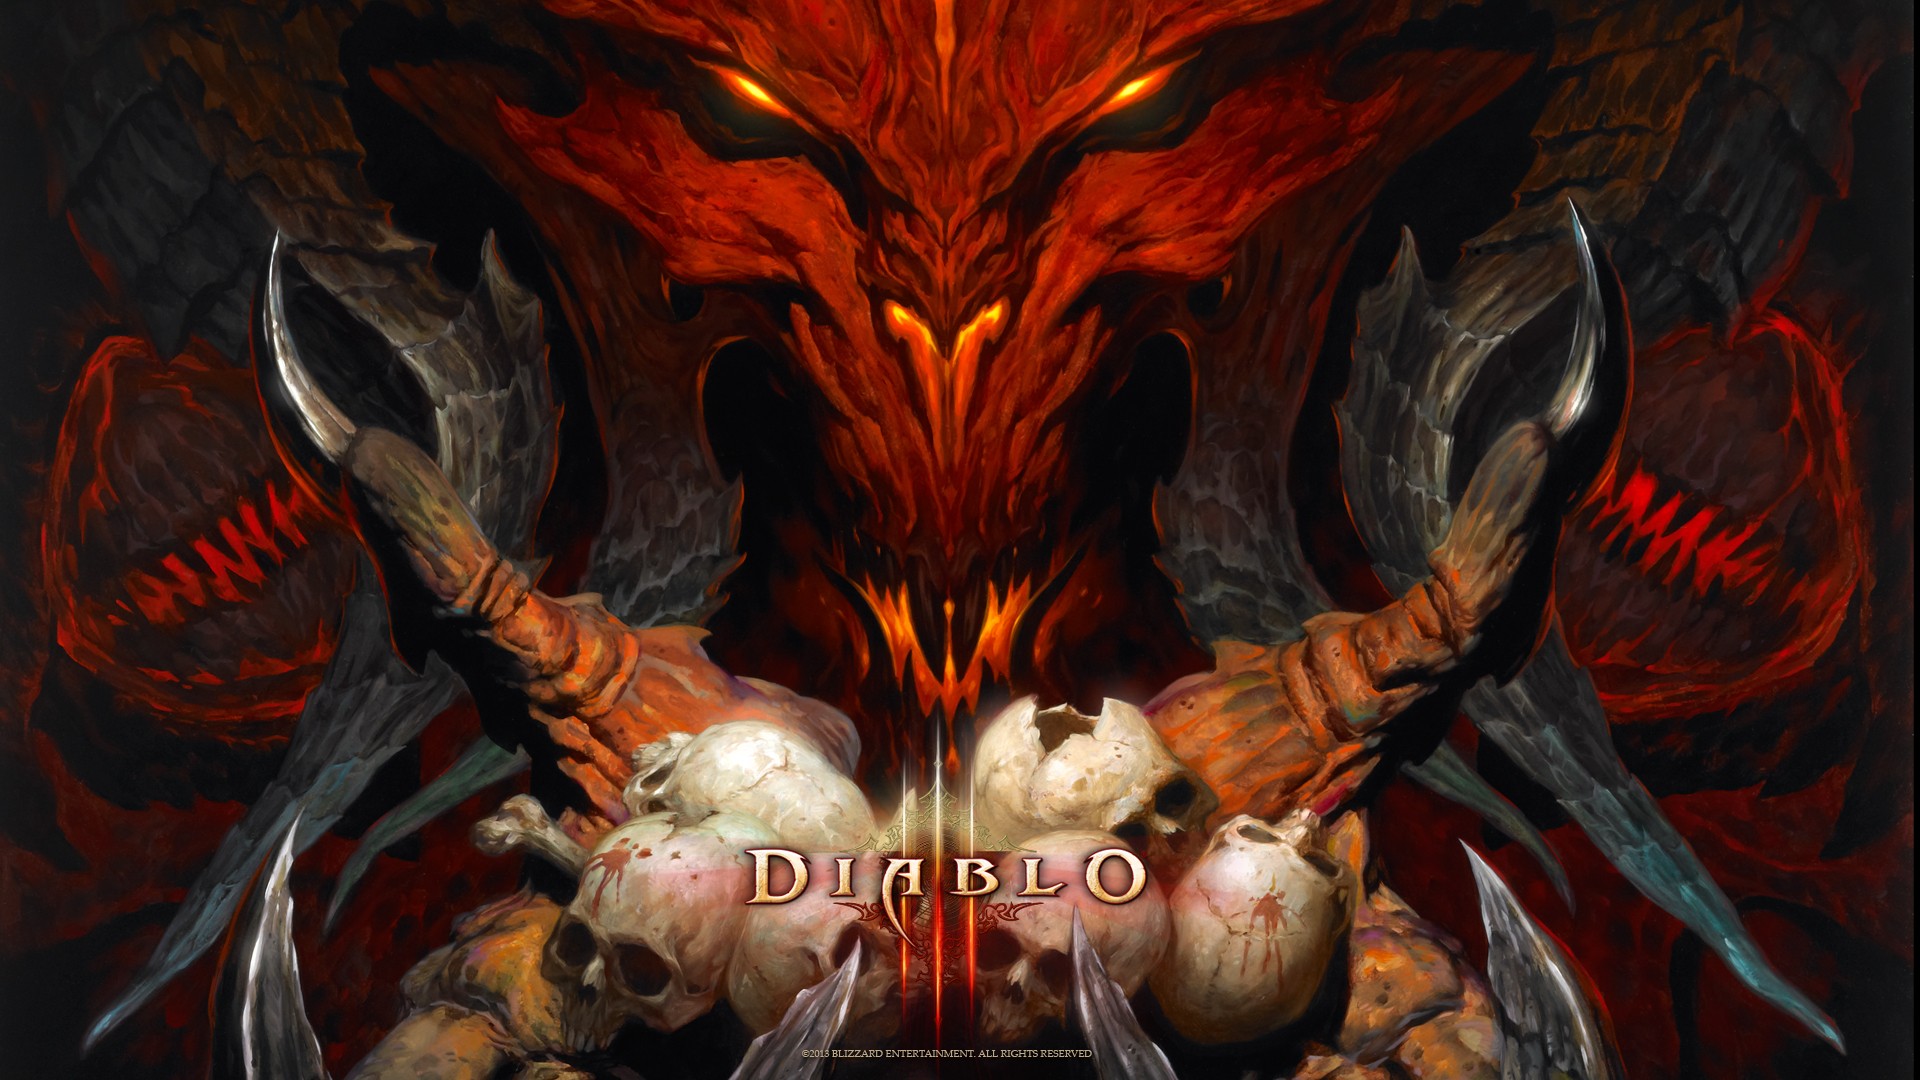 General 1920x1080 Blizzard Entertainment Diablo III video games glowing eyes skull PC gaming video game art 2013 (Year)